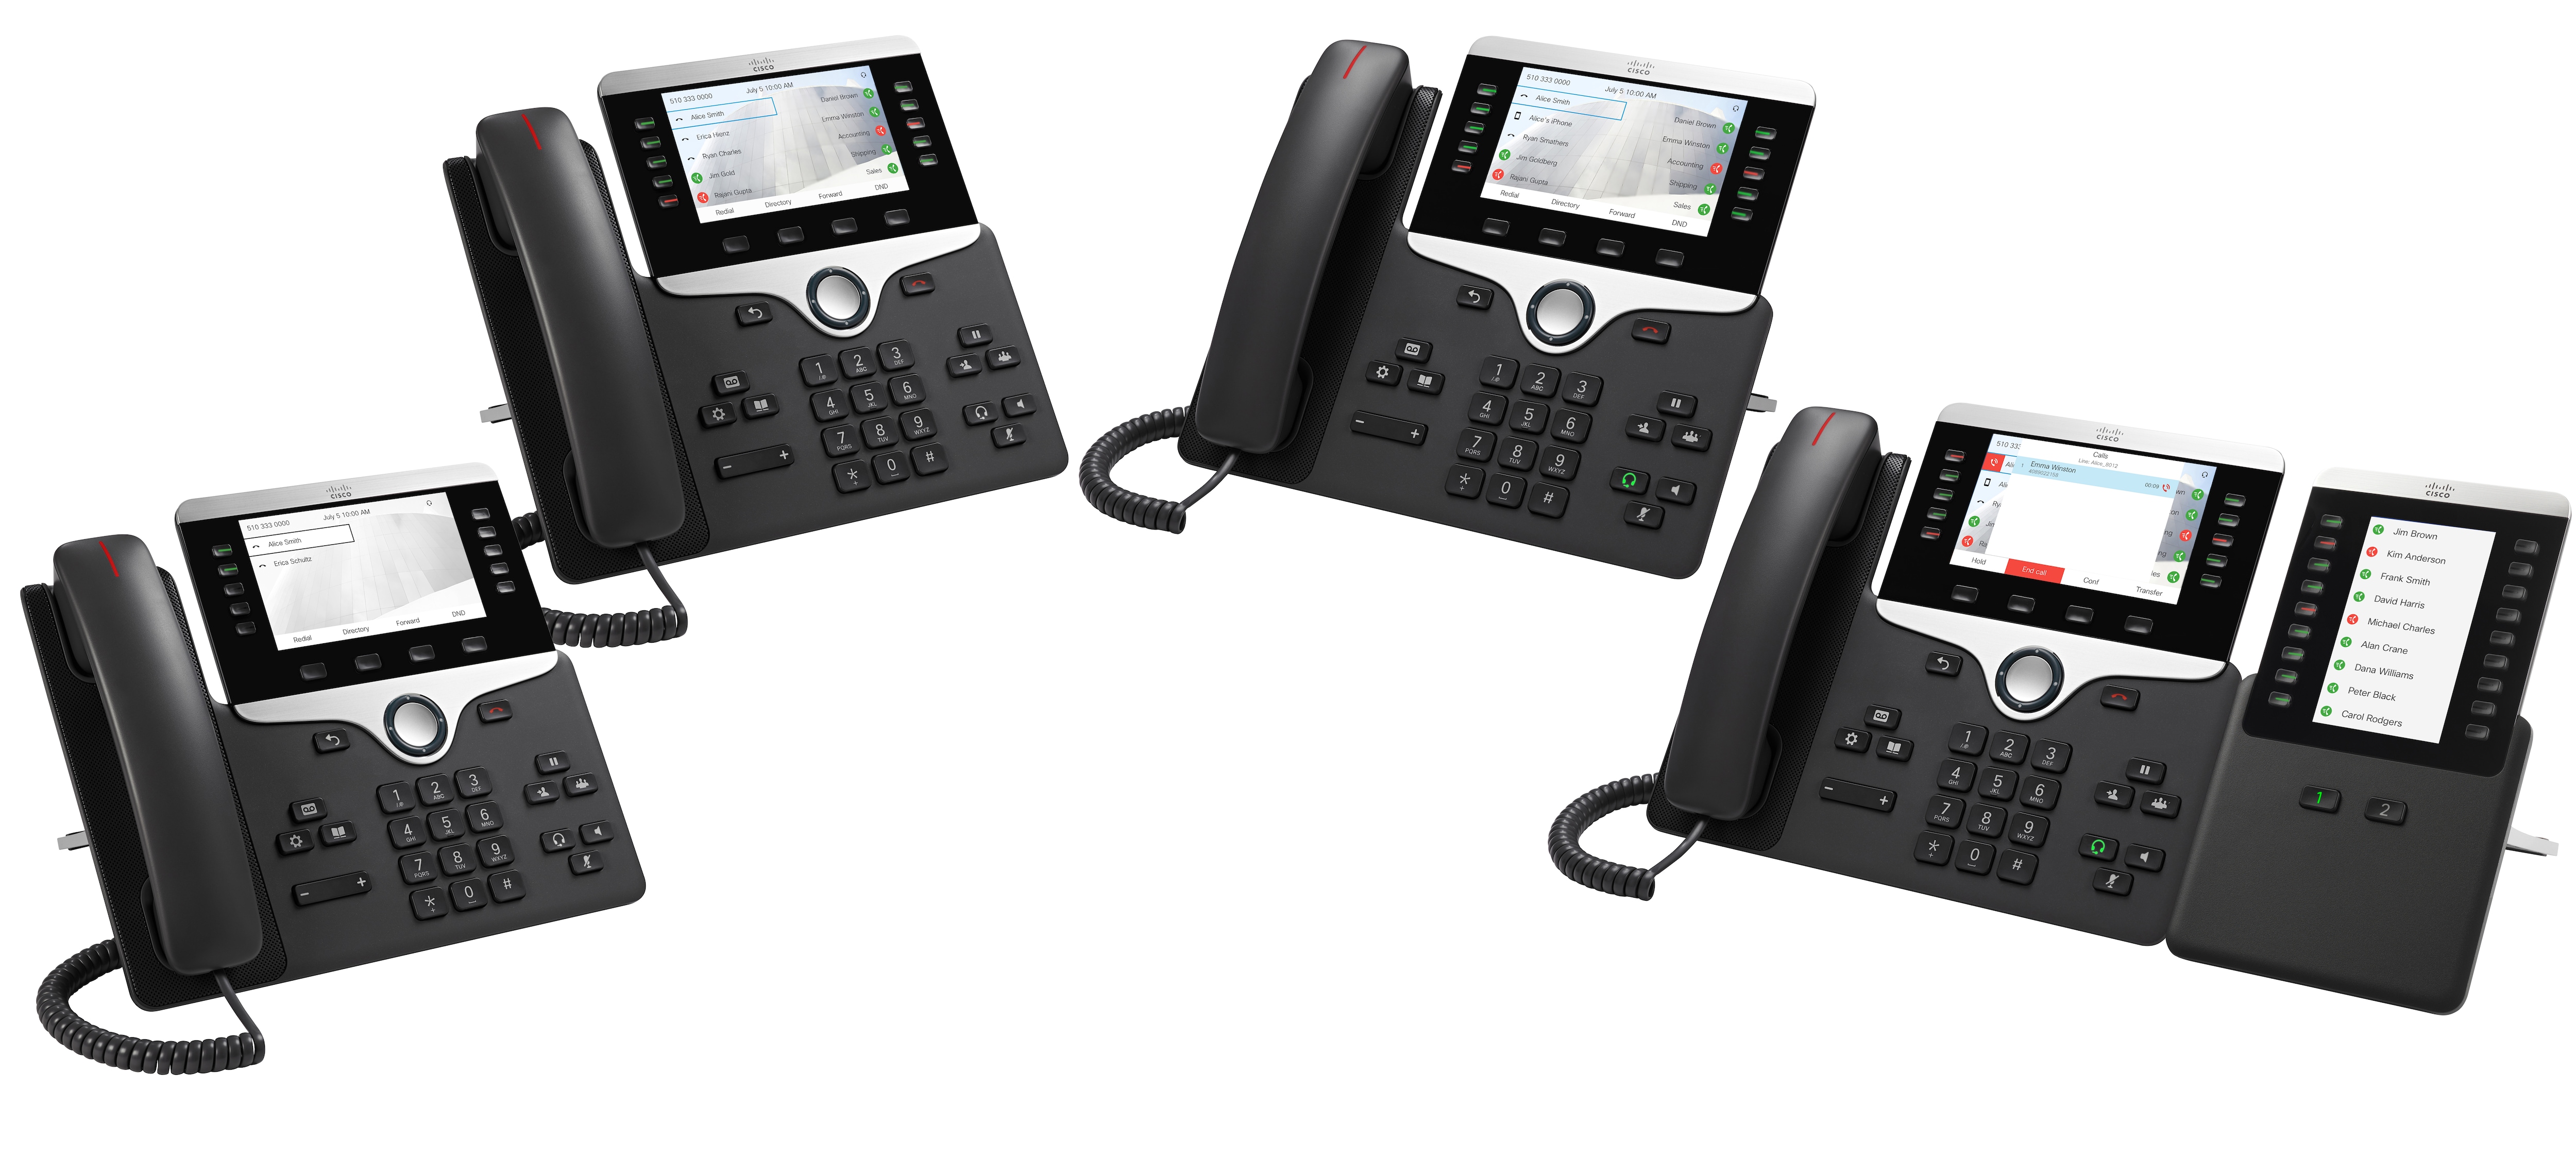 Cisco IP Phone 8800 Series Multiplatform Phones User Guide - Your Phone